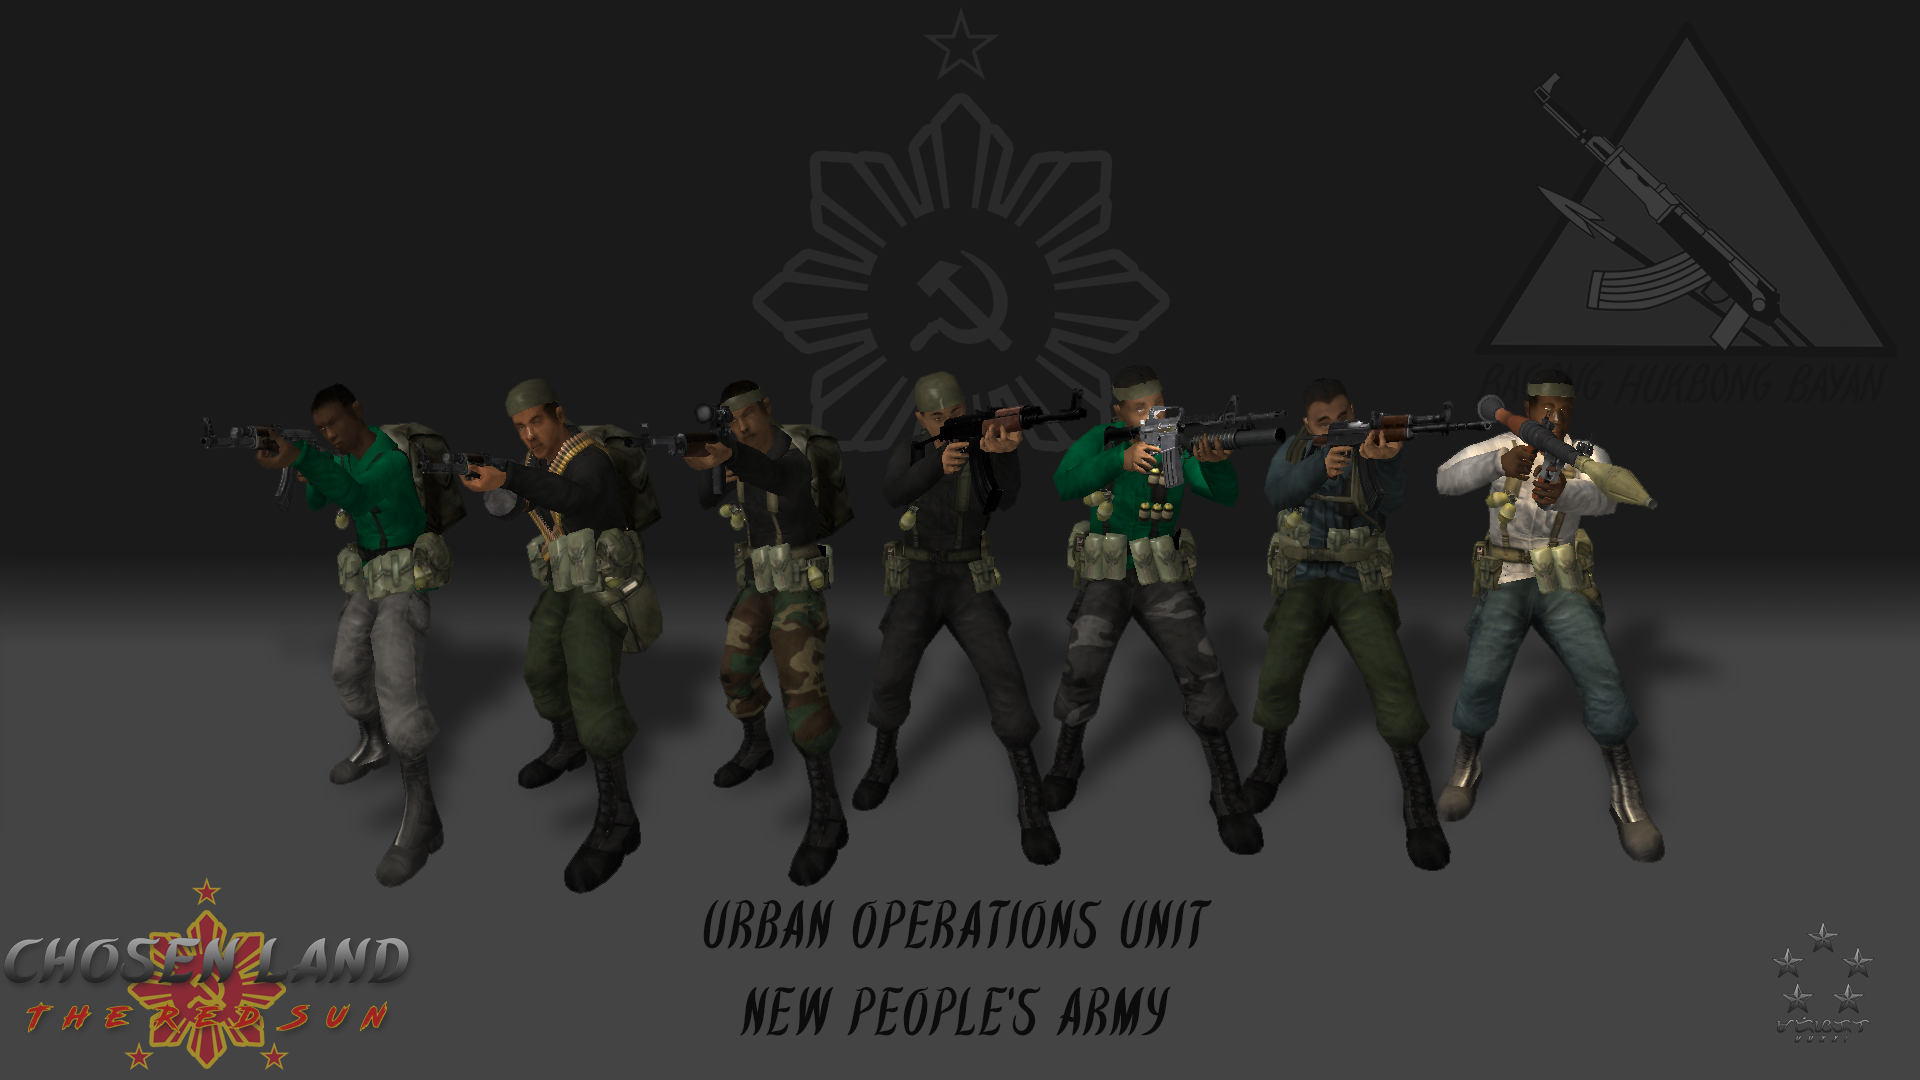 New Peoples Army   Urban Operat